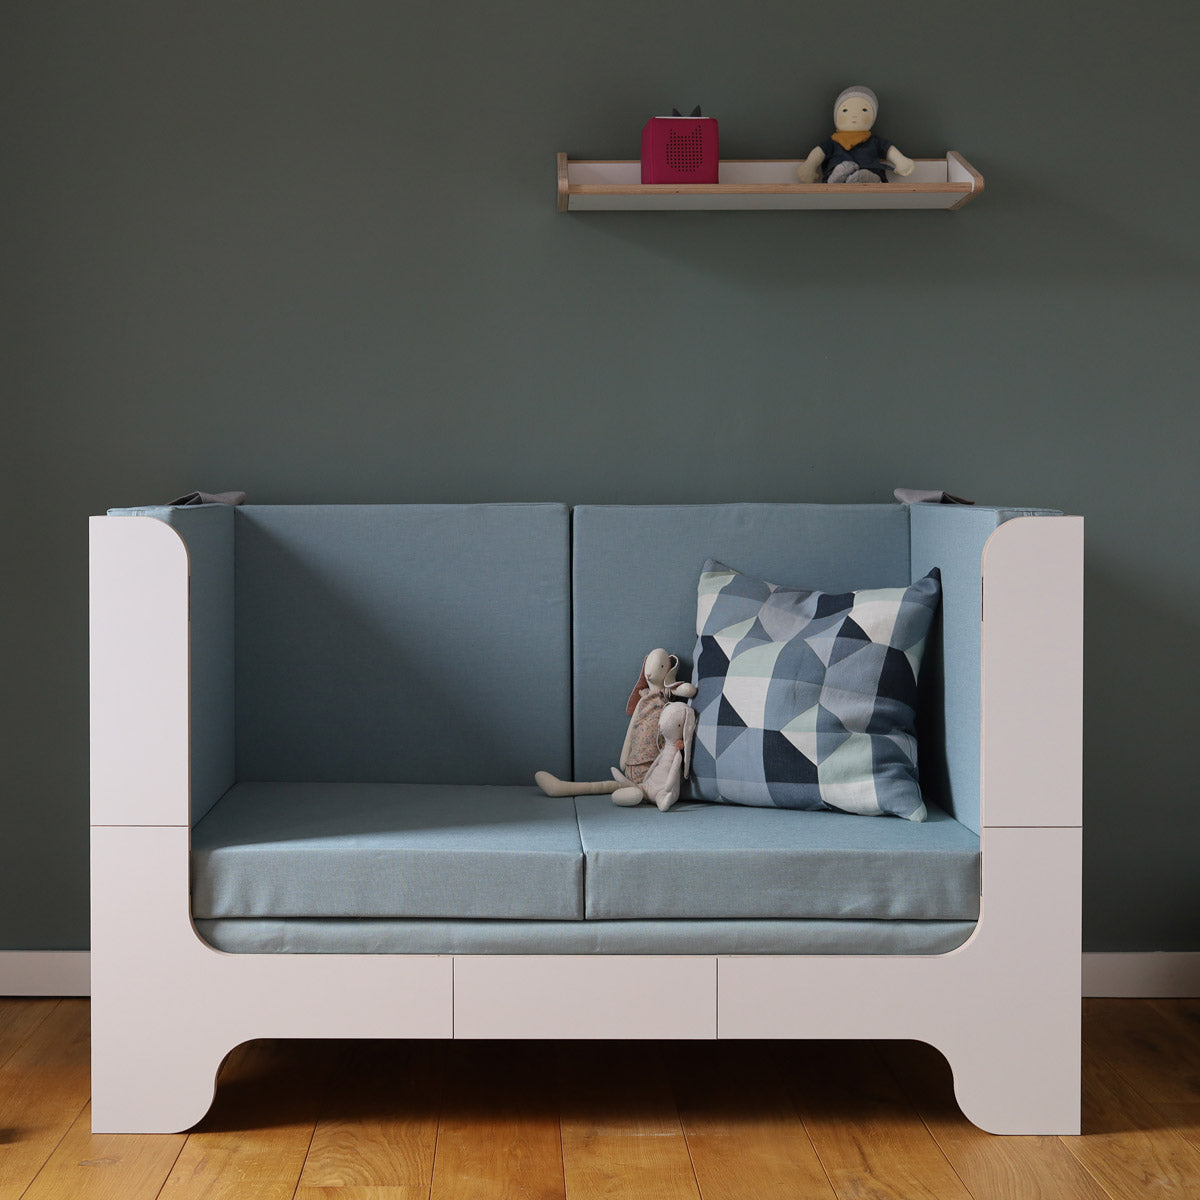 Polsterset von Nanito für Kinderbett Minimalmaxi als Sofa Farbe pastell türkis